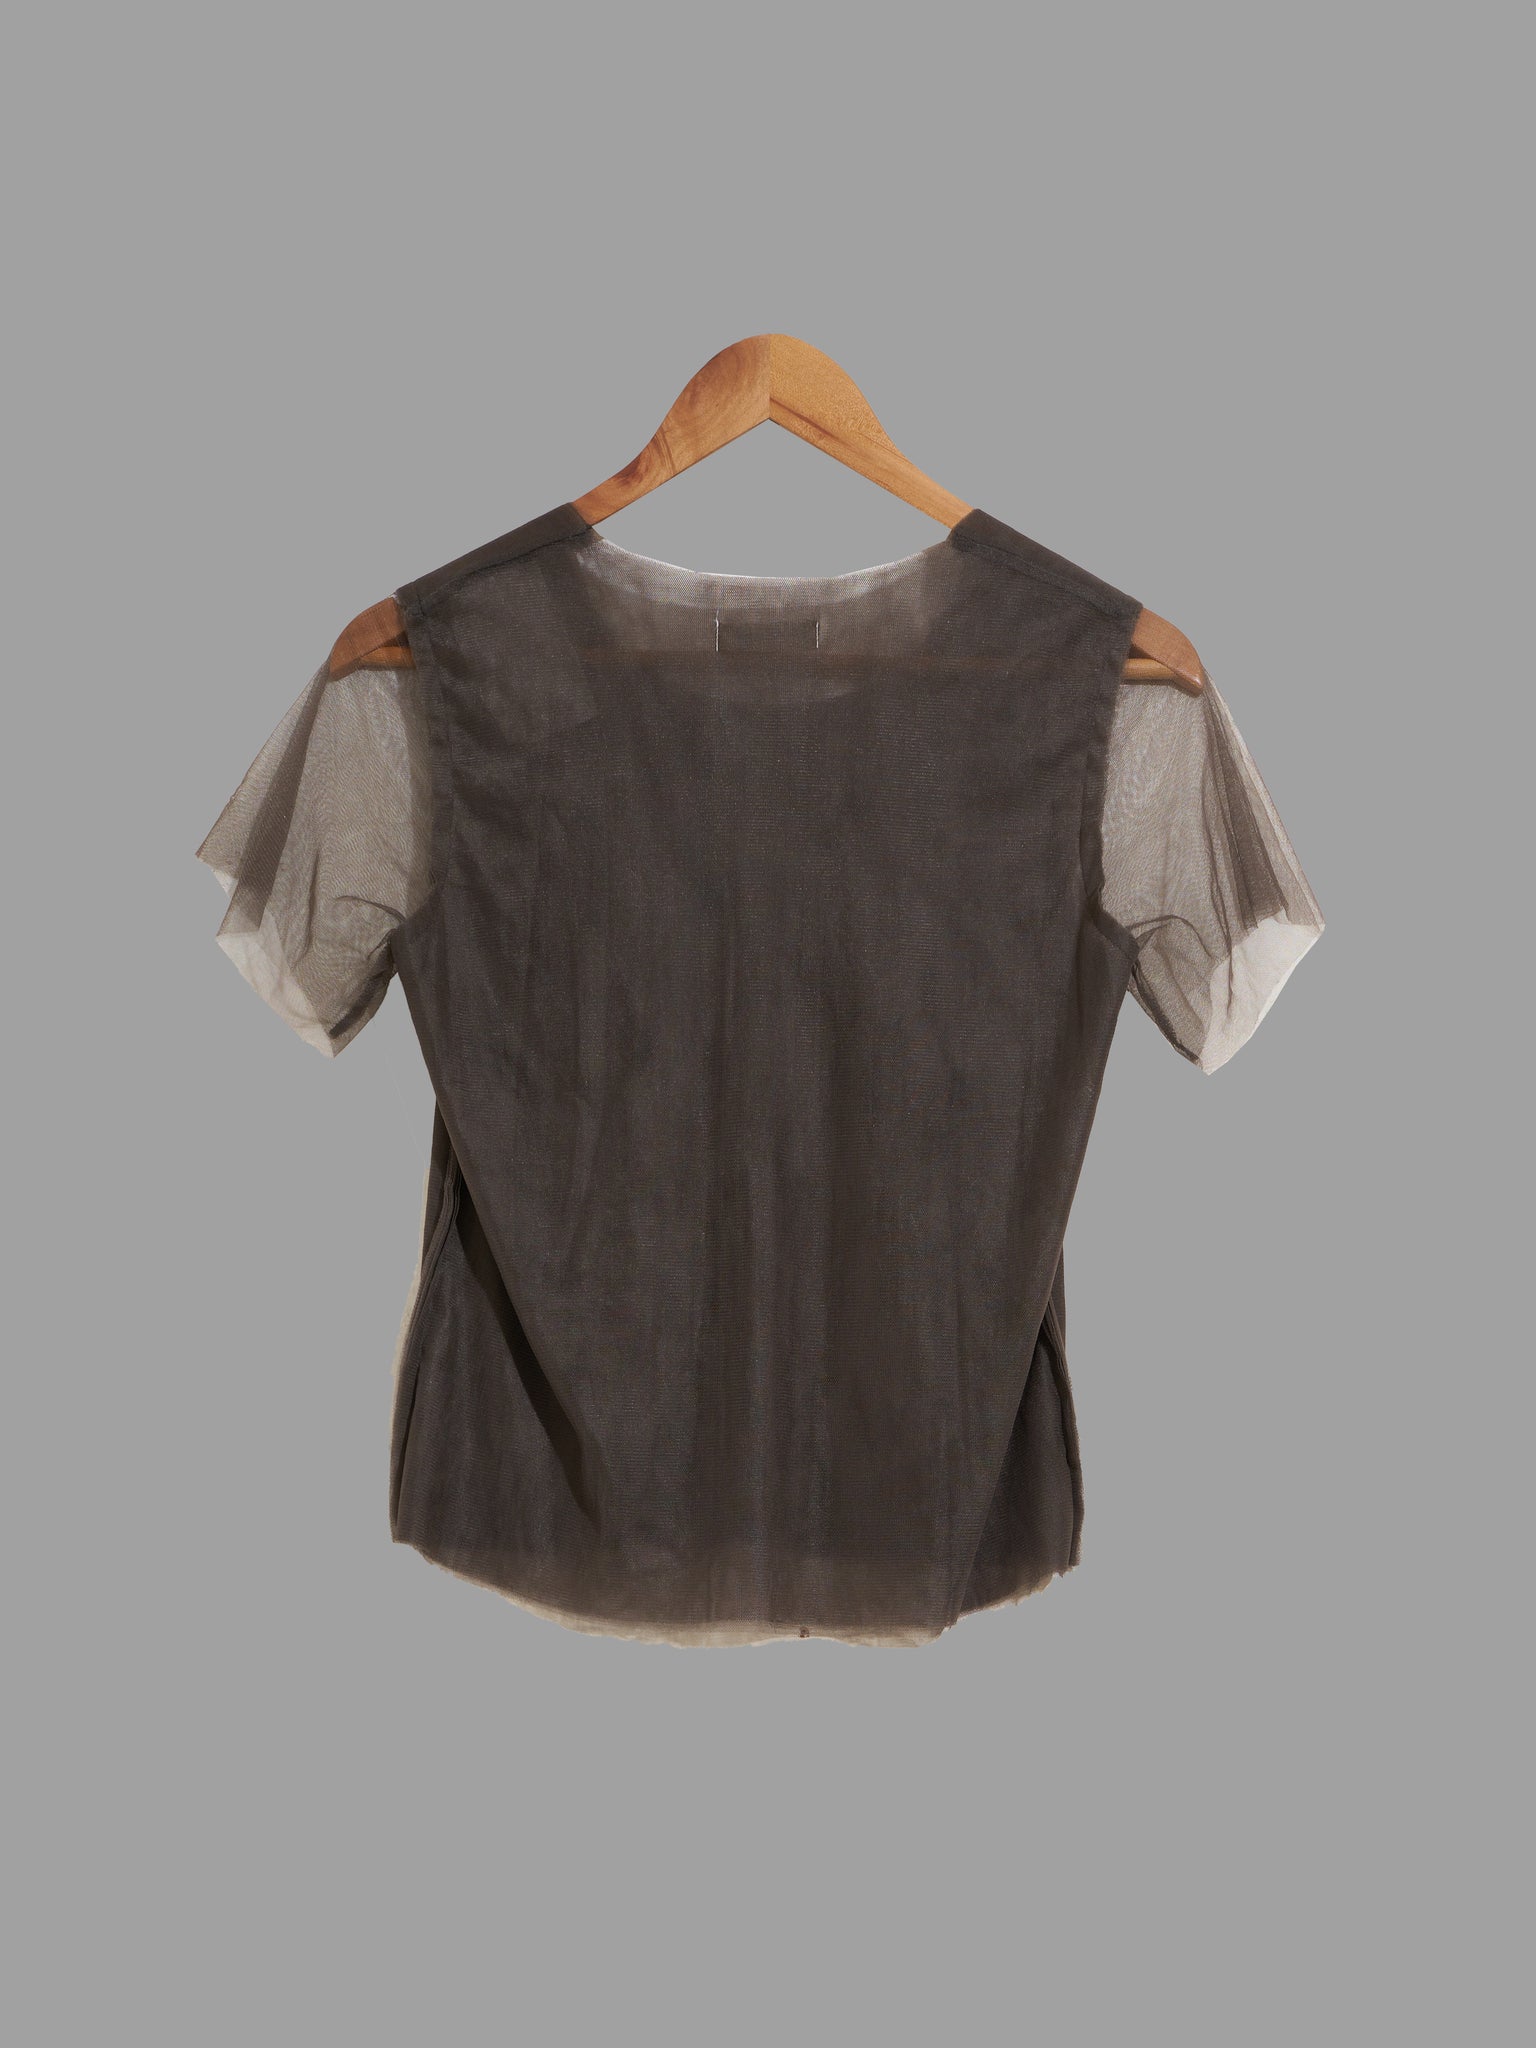 Comme des Garcons 1997 grey nylon mesh 5 layer tshirt - approx M S